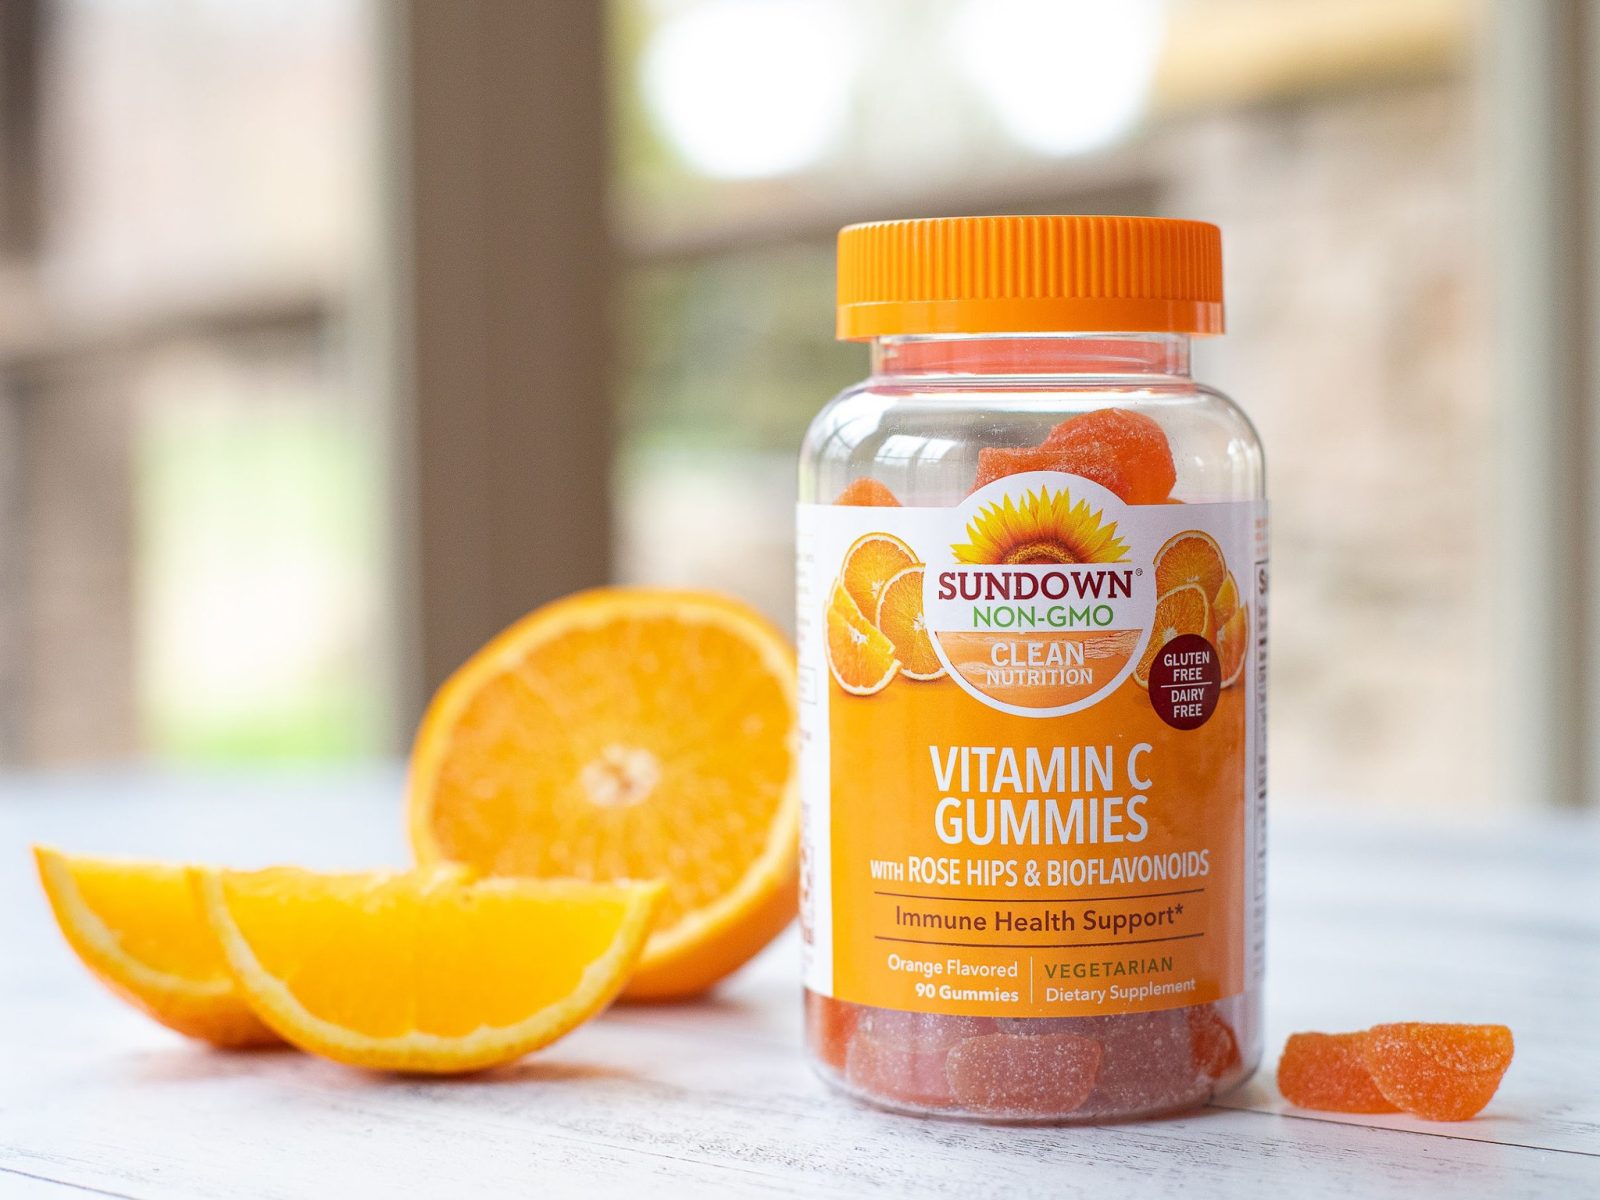 Sundown Naturals Vitamins As Low As FREE At Publix